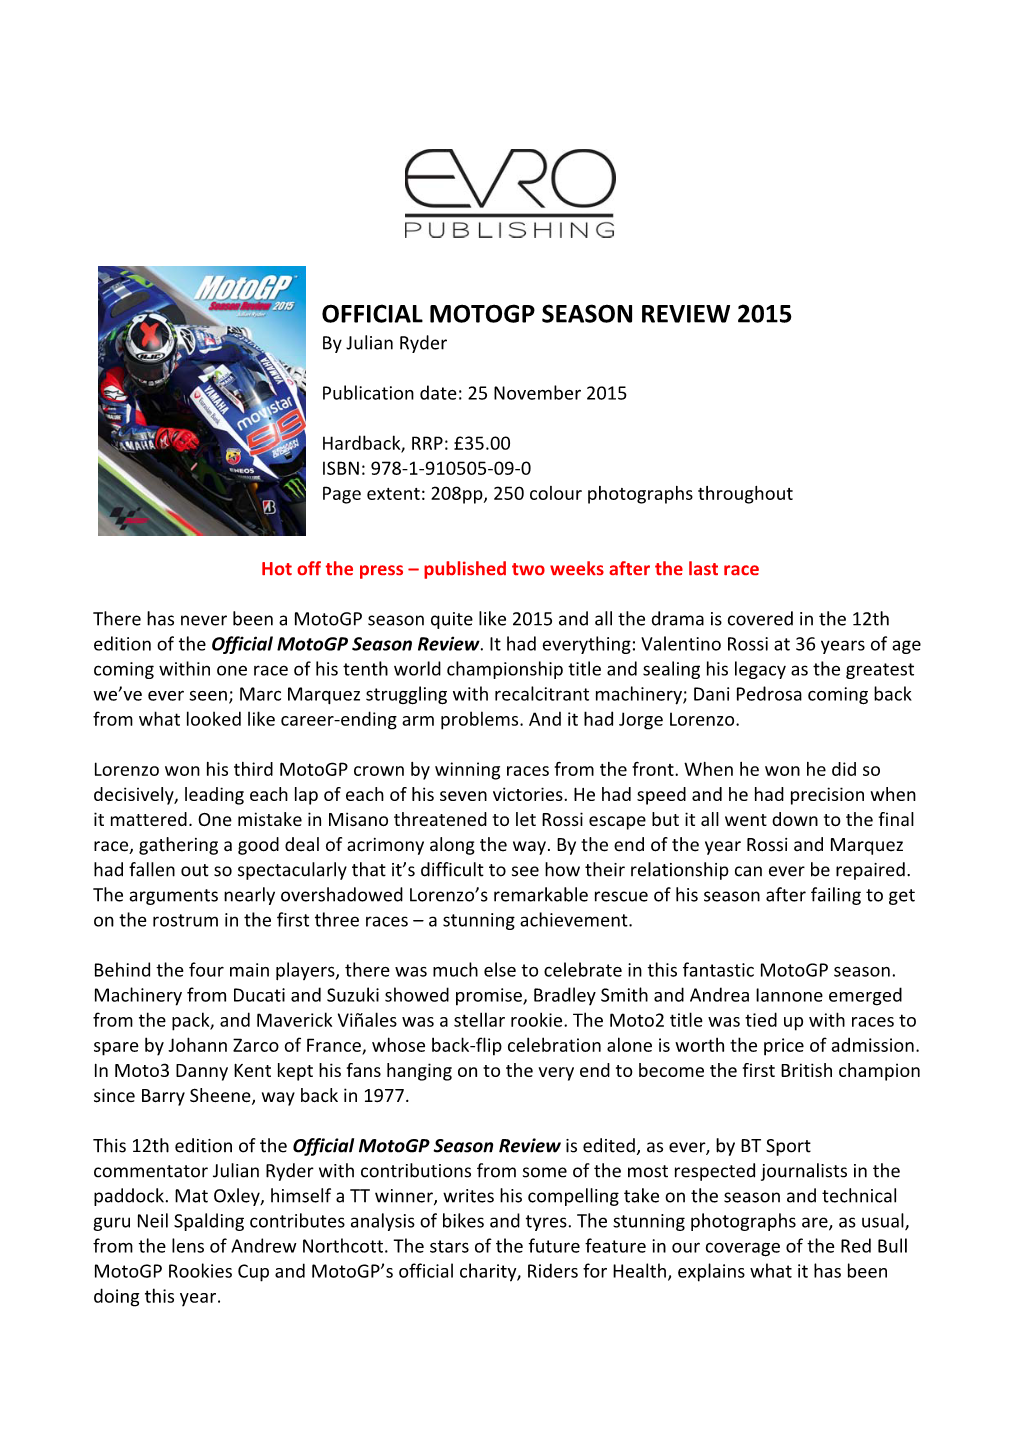 OFFICIAL MOTOGP SEASON REVIEW 2015 by Julian Ryder